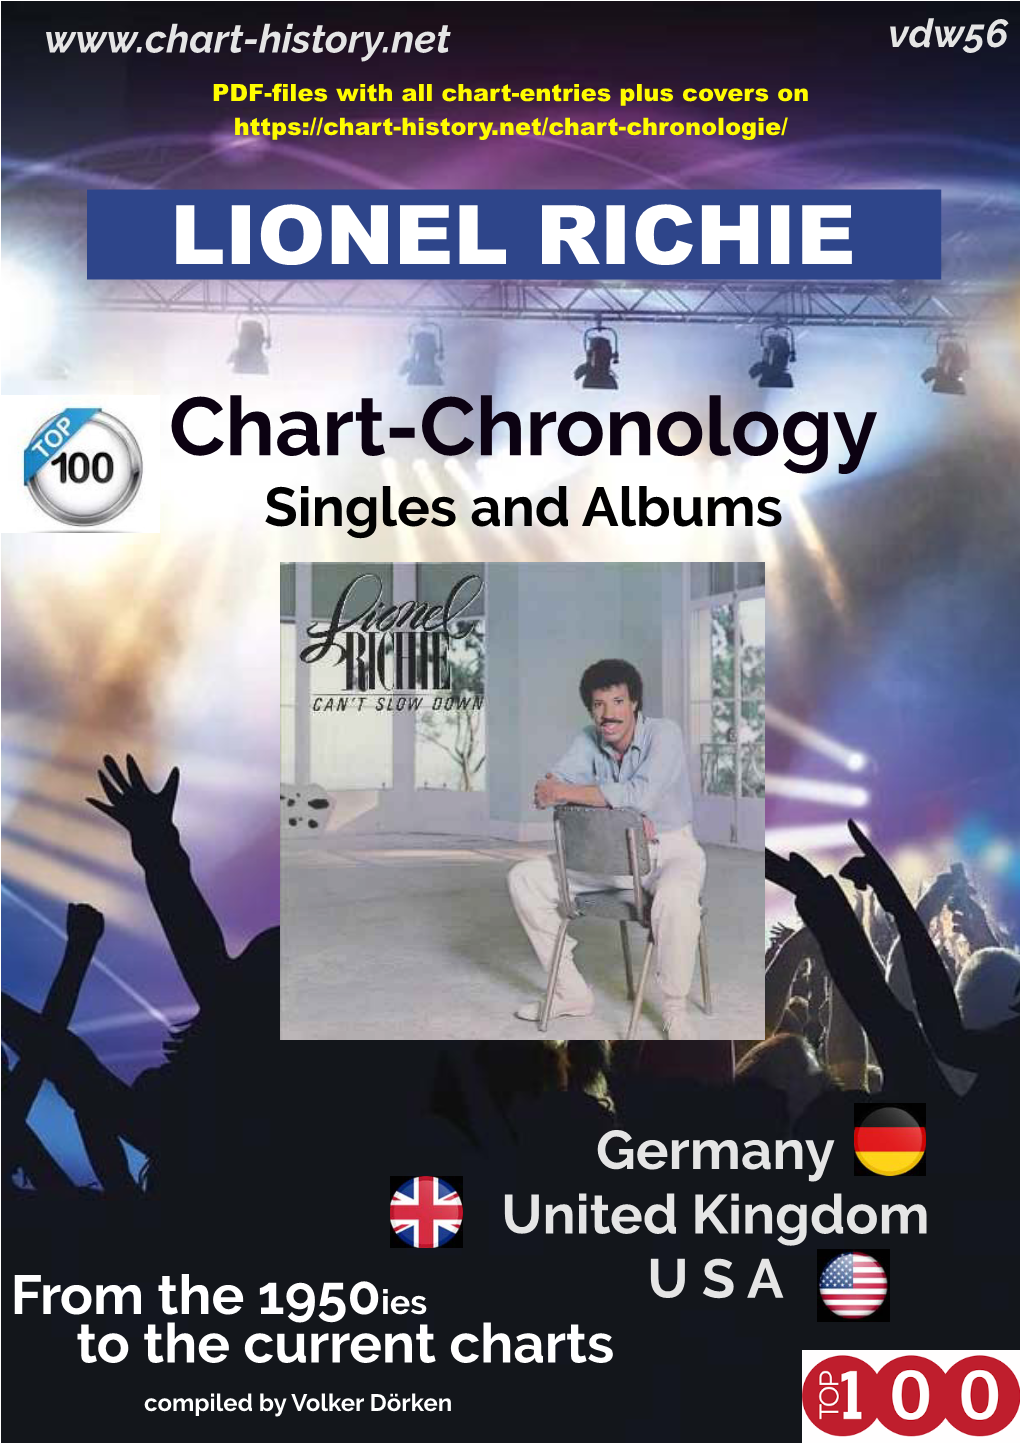 Chart-Chronology LIONEL RICHIE